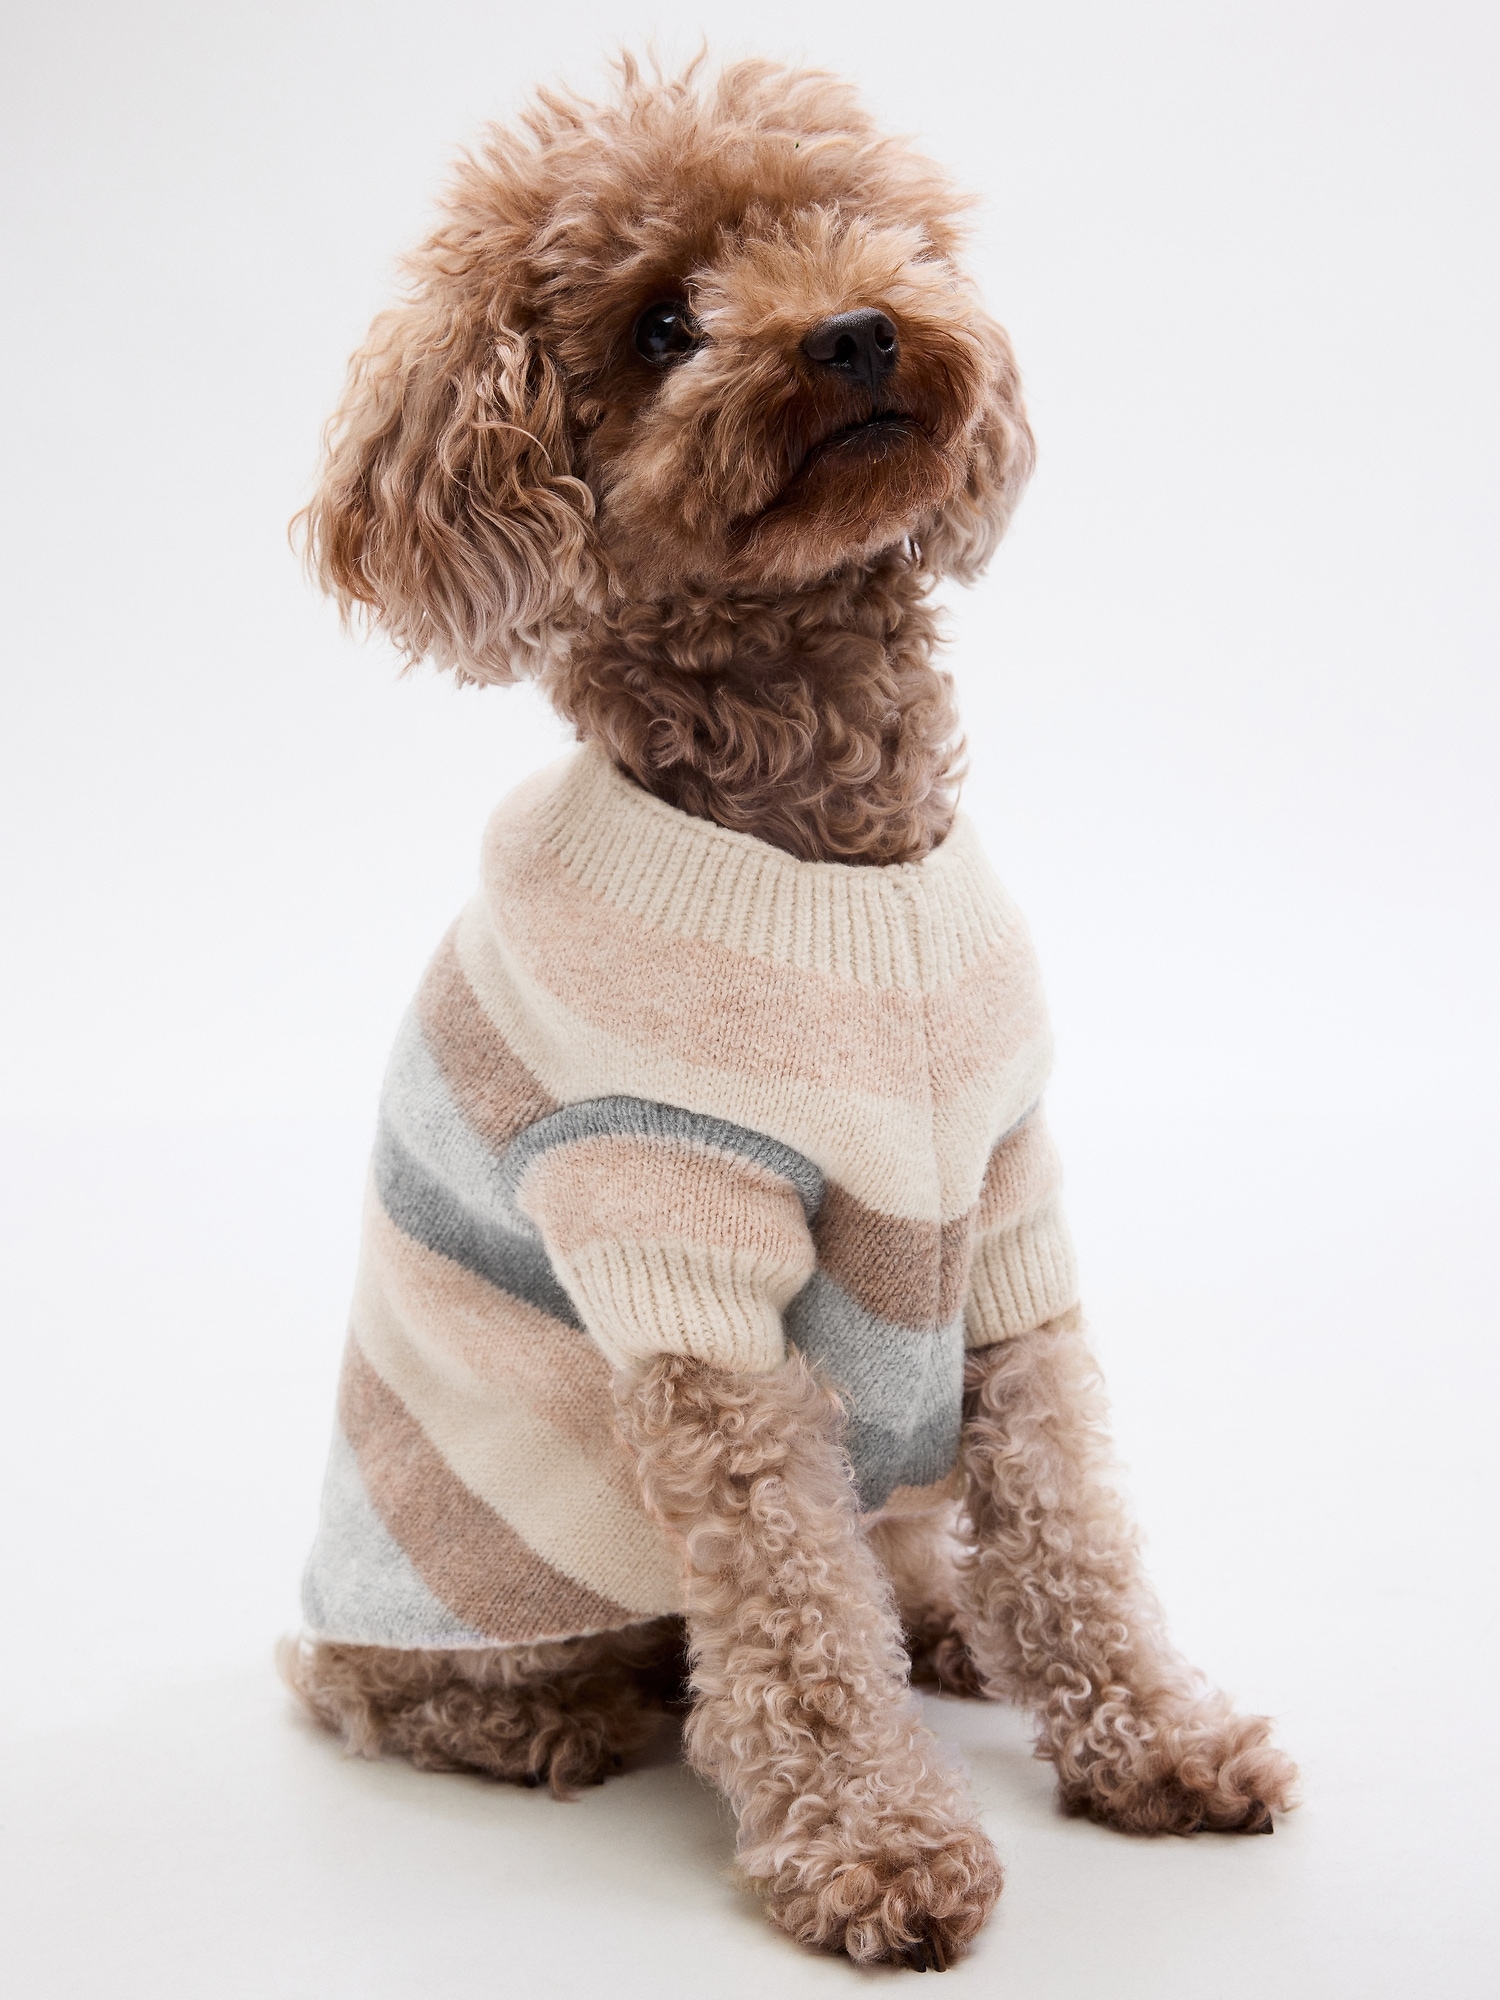 Gap Pet CashSoft Sweater